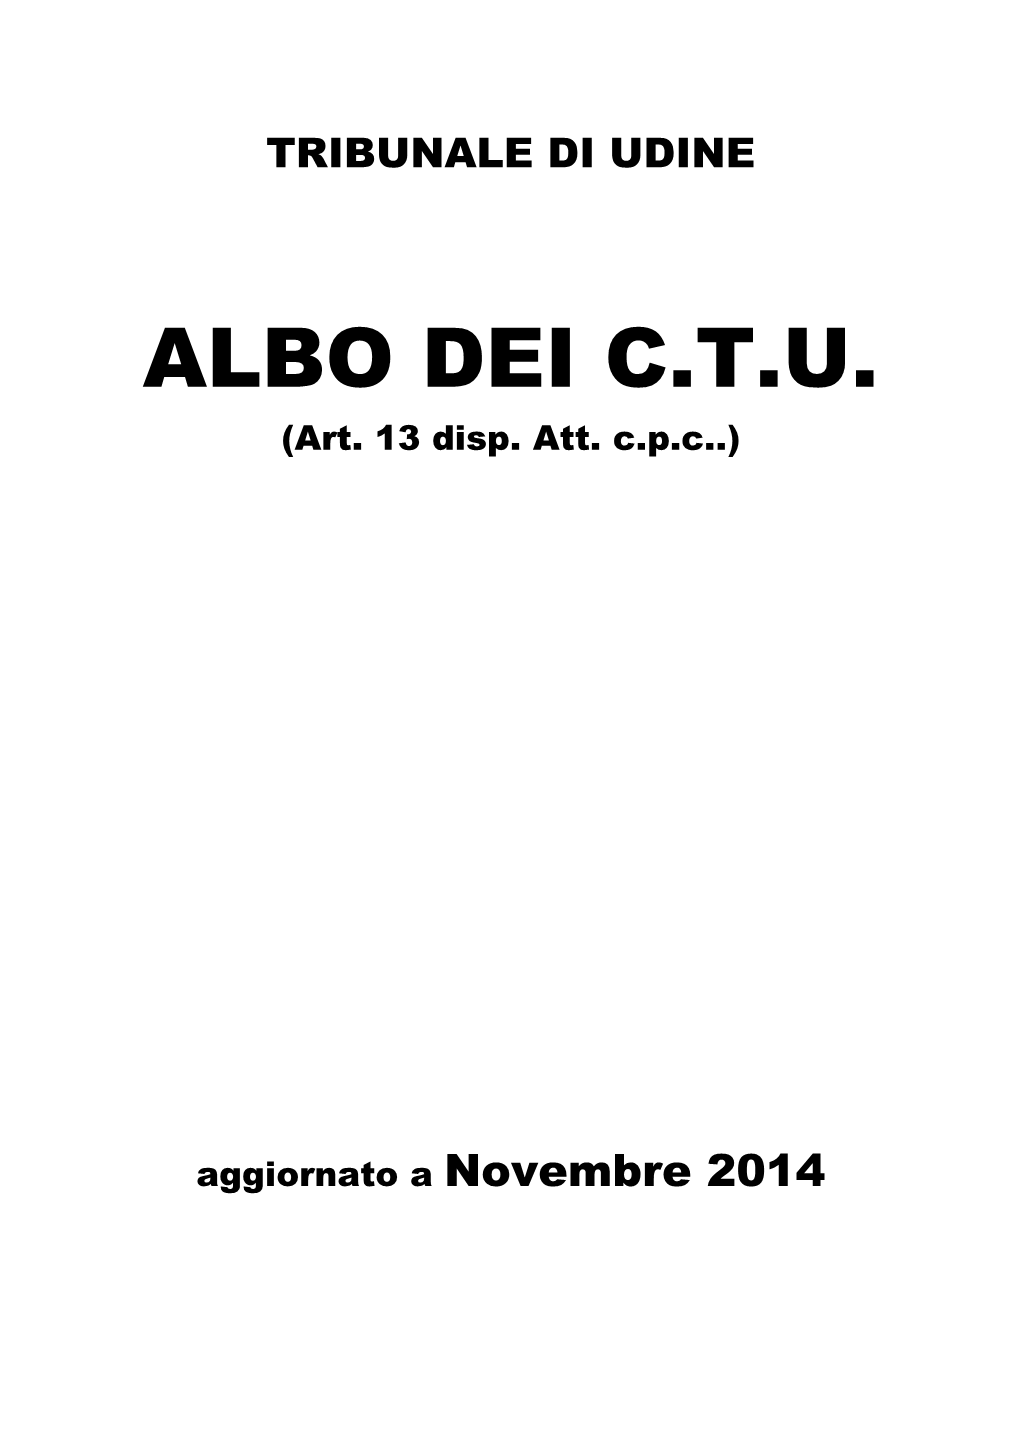 ALBO DEI C.T.U. (Art